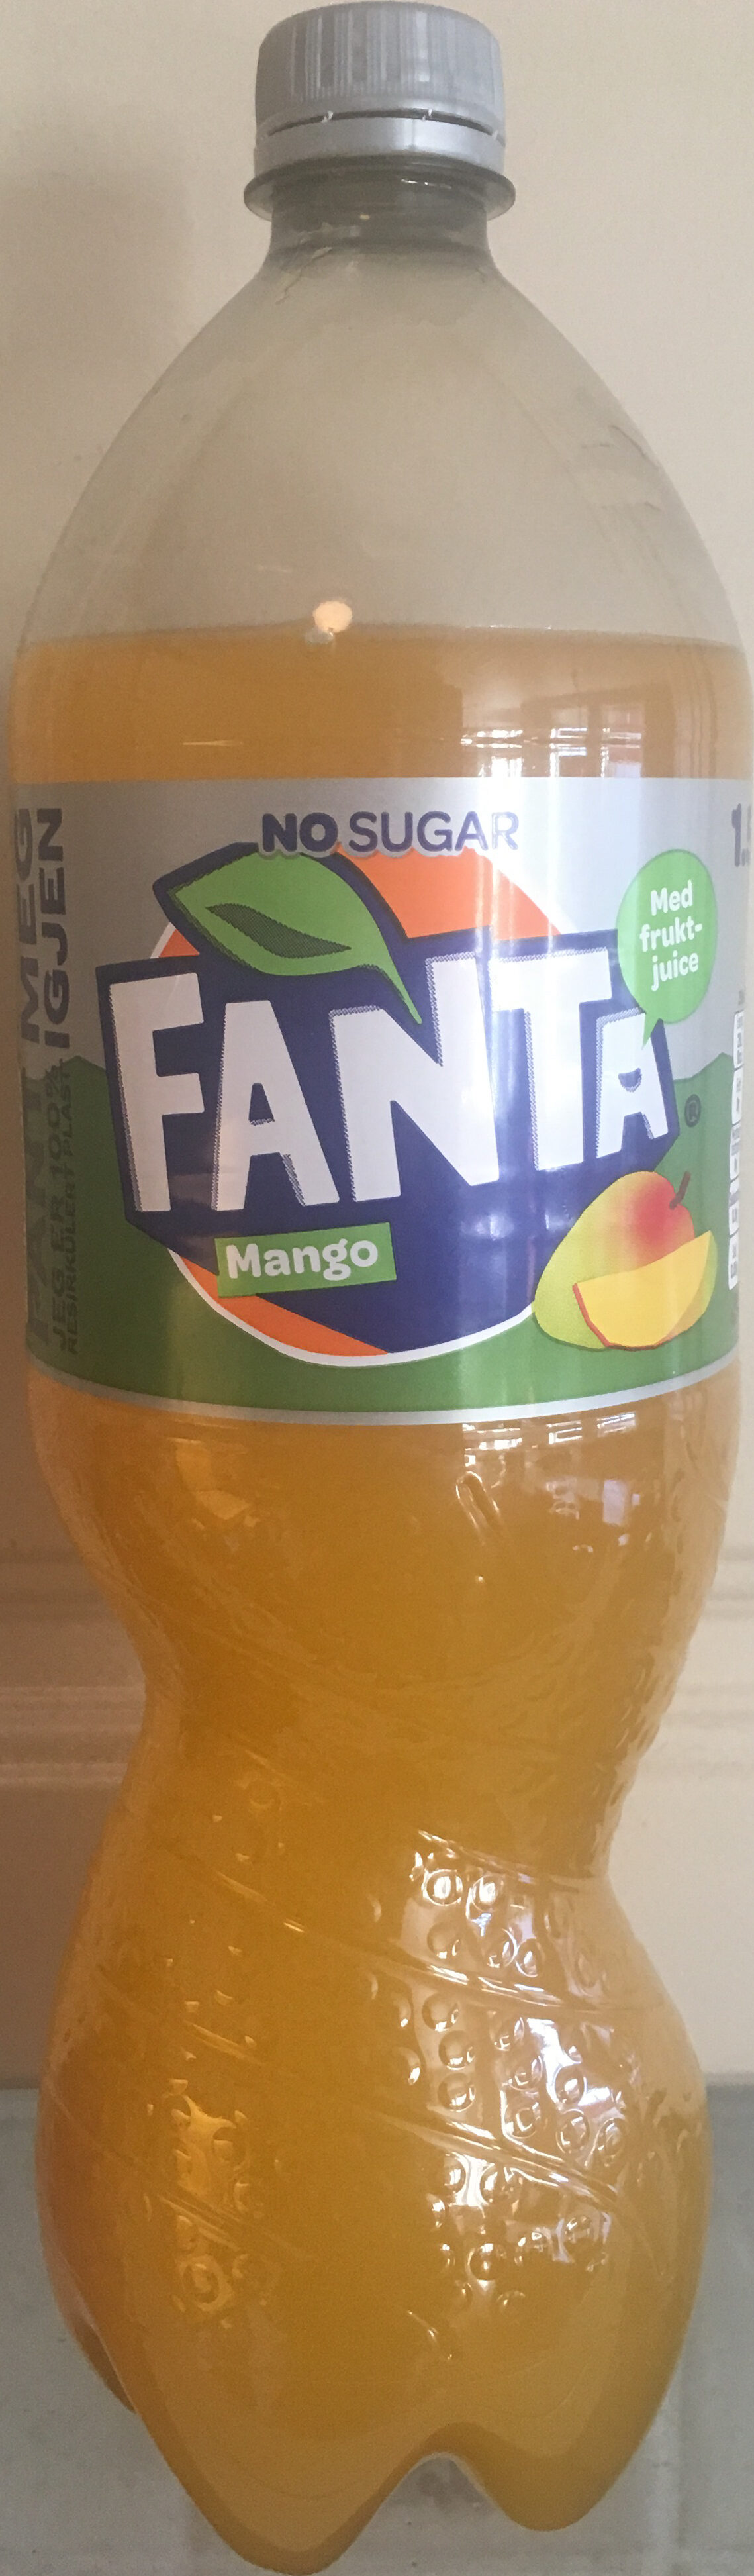 Fanta Mango - Product - nb